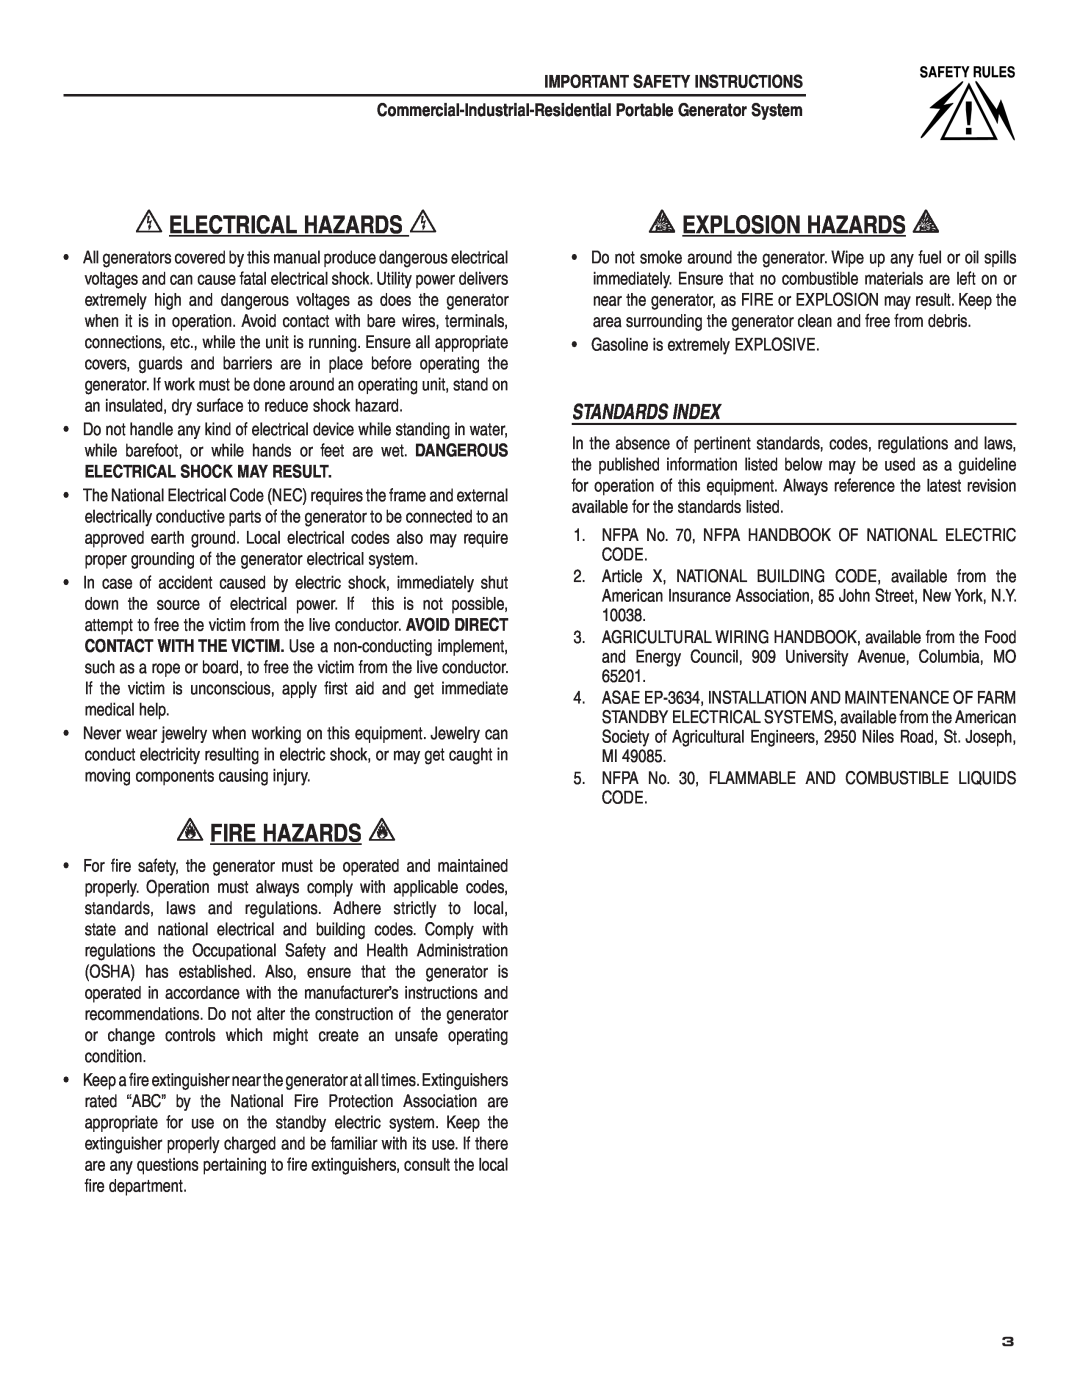 Guardian Technologies 004582-2 owner manual  Electrical Hazards,  Explosion Hazards,  Fire Hazards, Standards Index 